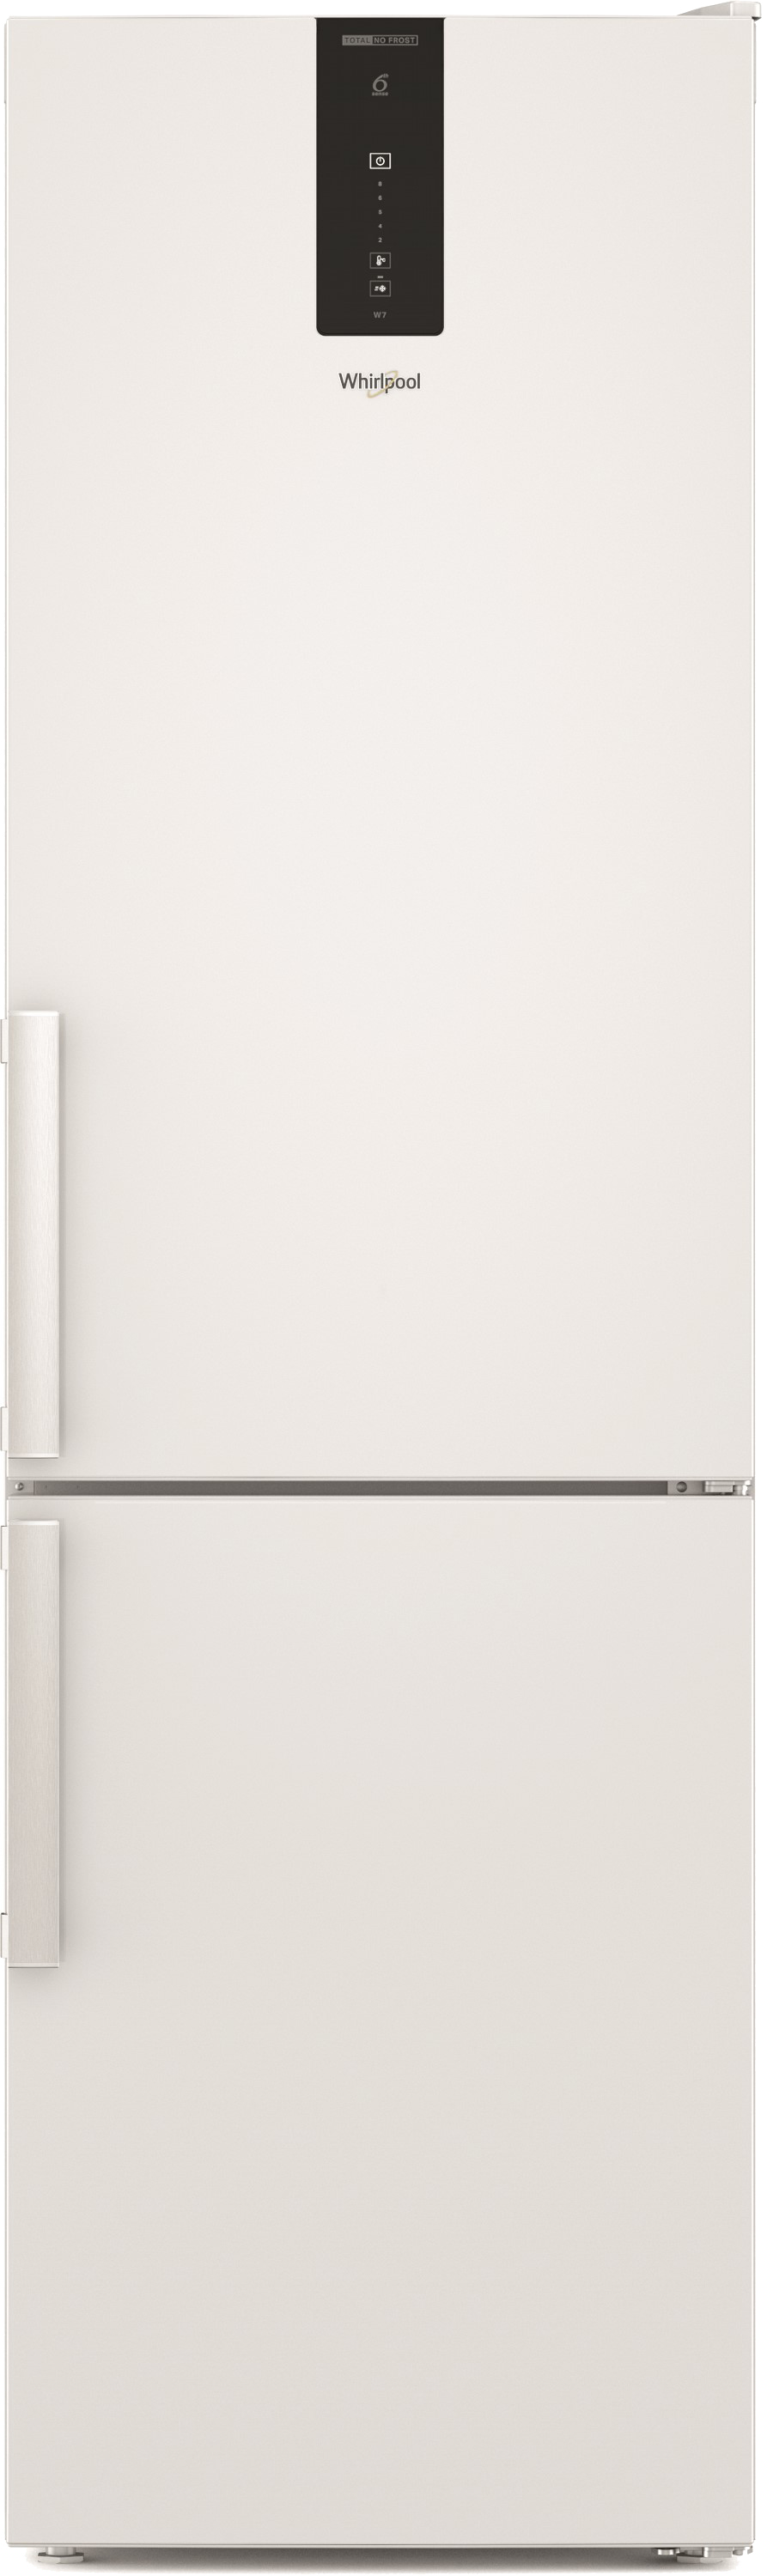 Холодильник Whirlpool W7X 92O W H UA в интернет-магазине, главное фото